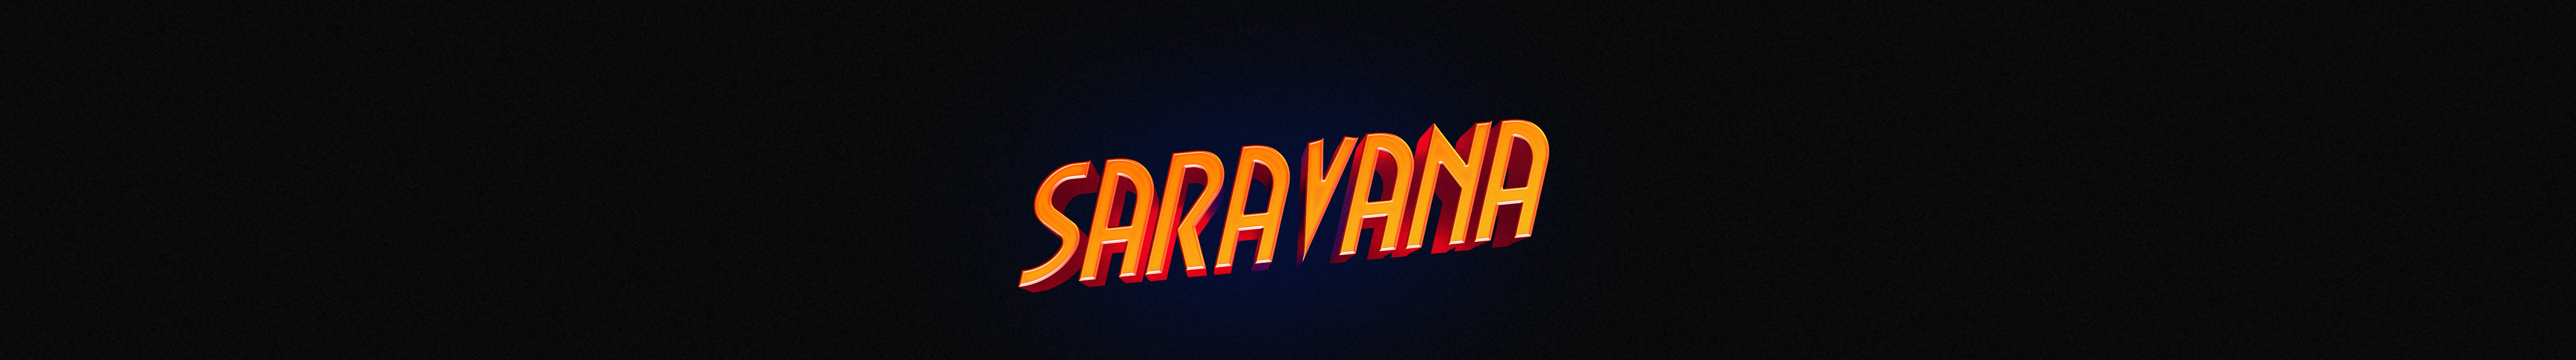 M Saravana's profile banner